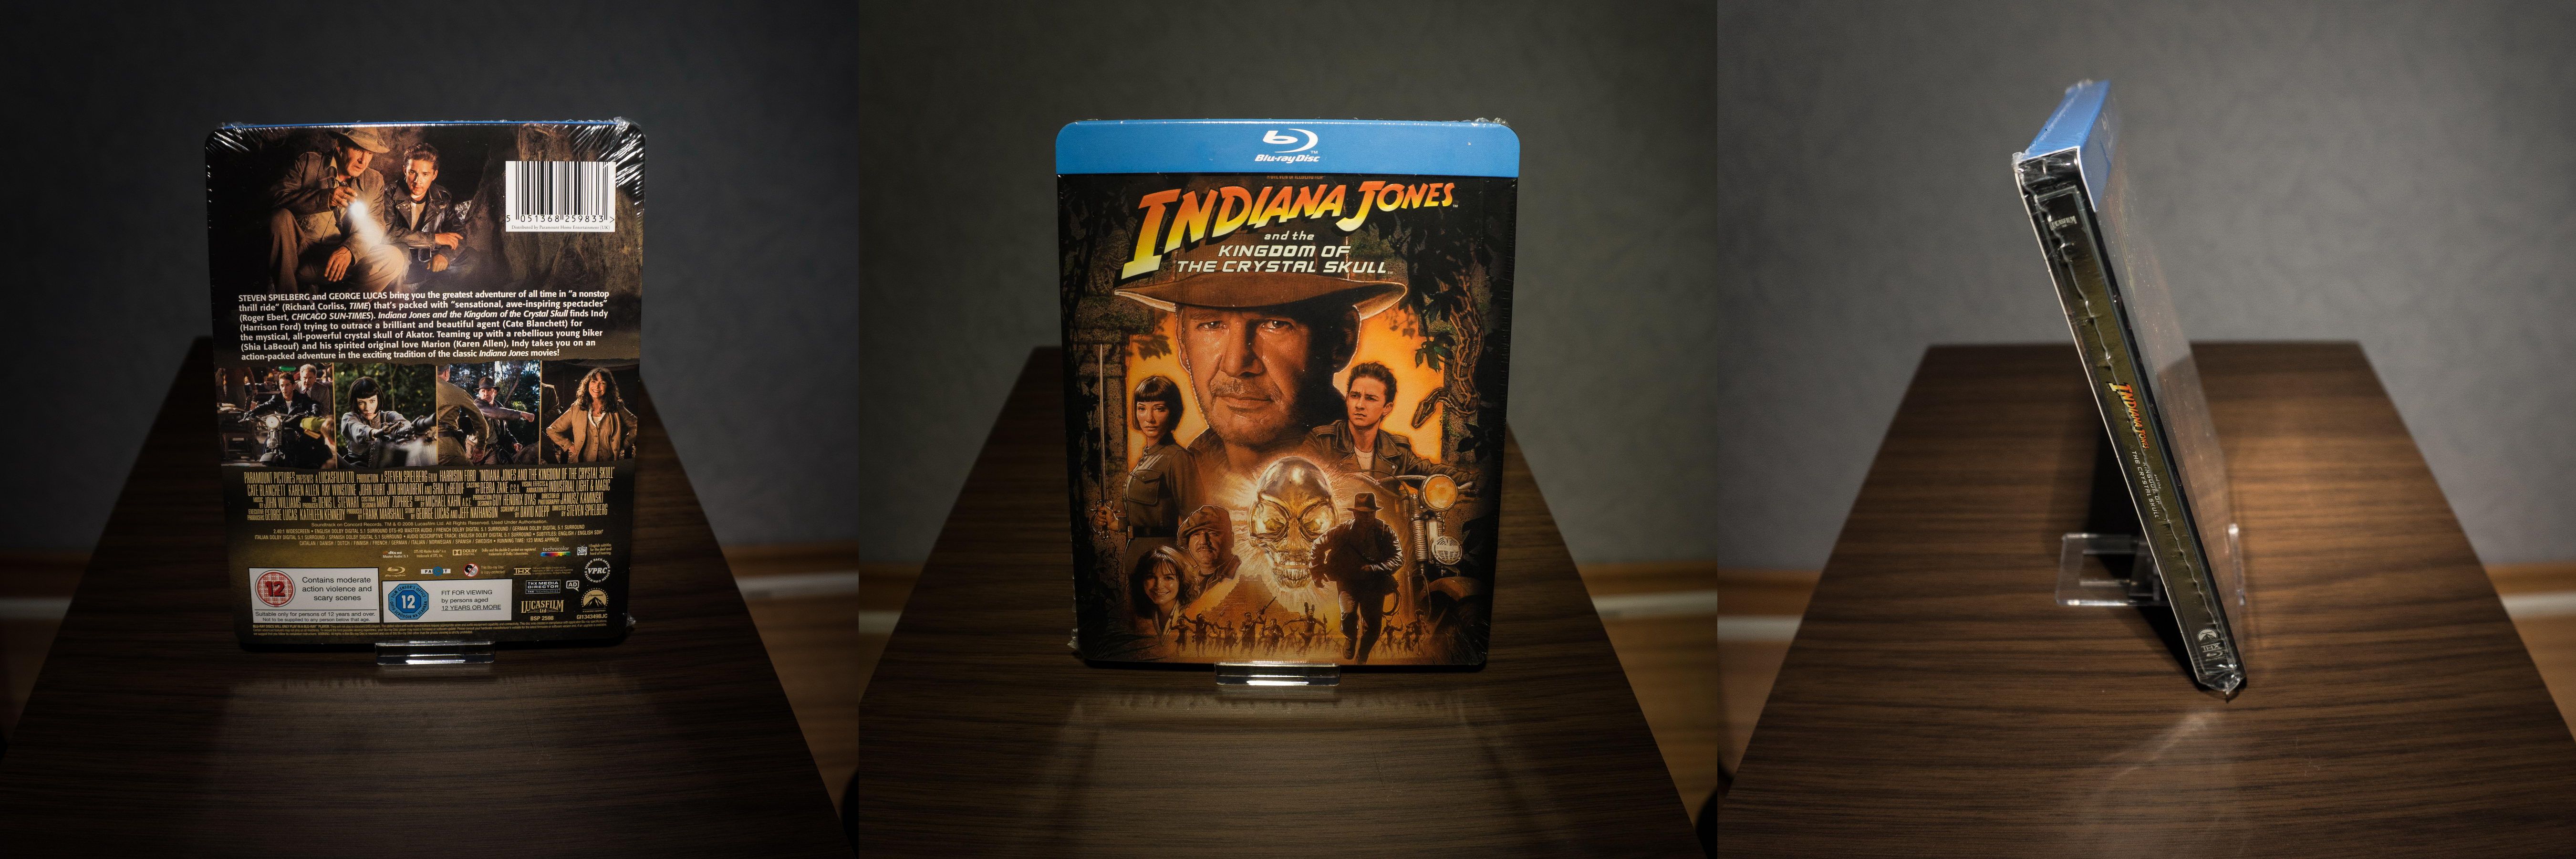 Indiana Jones The Crystal Skull UK